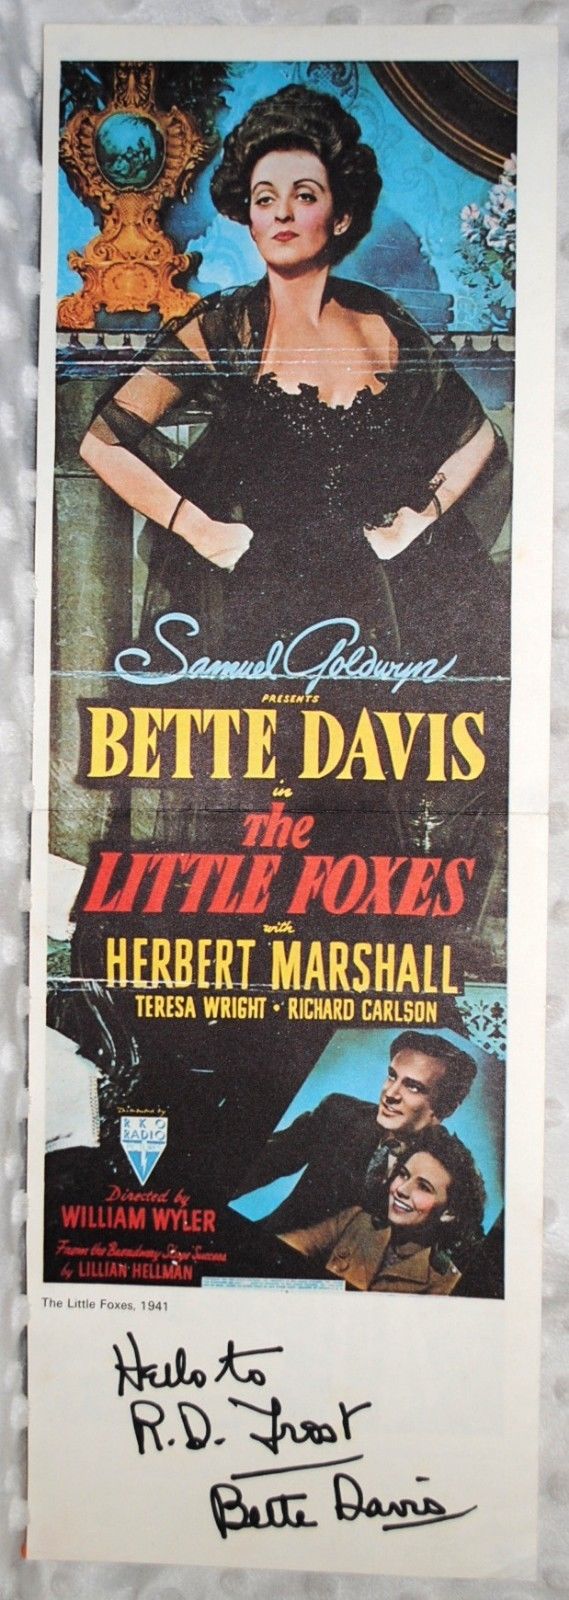 Bette Davis Signed Movie Card w/ 8 x 10 Photo